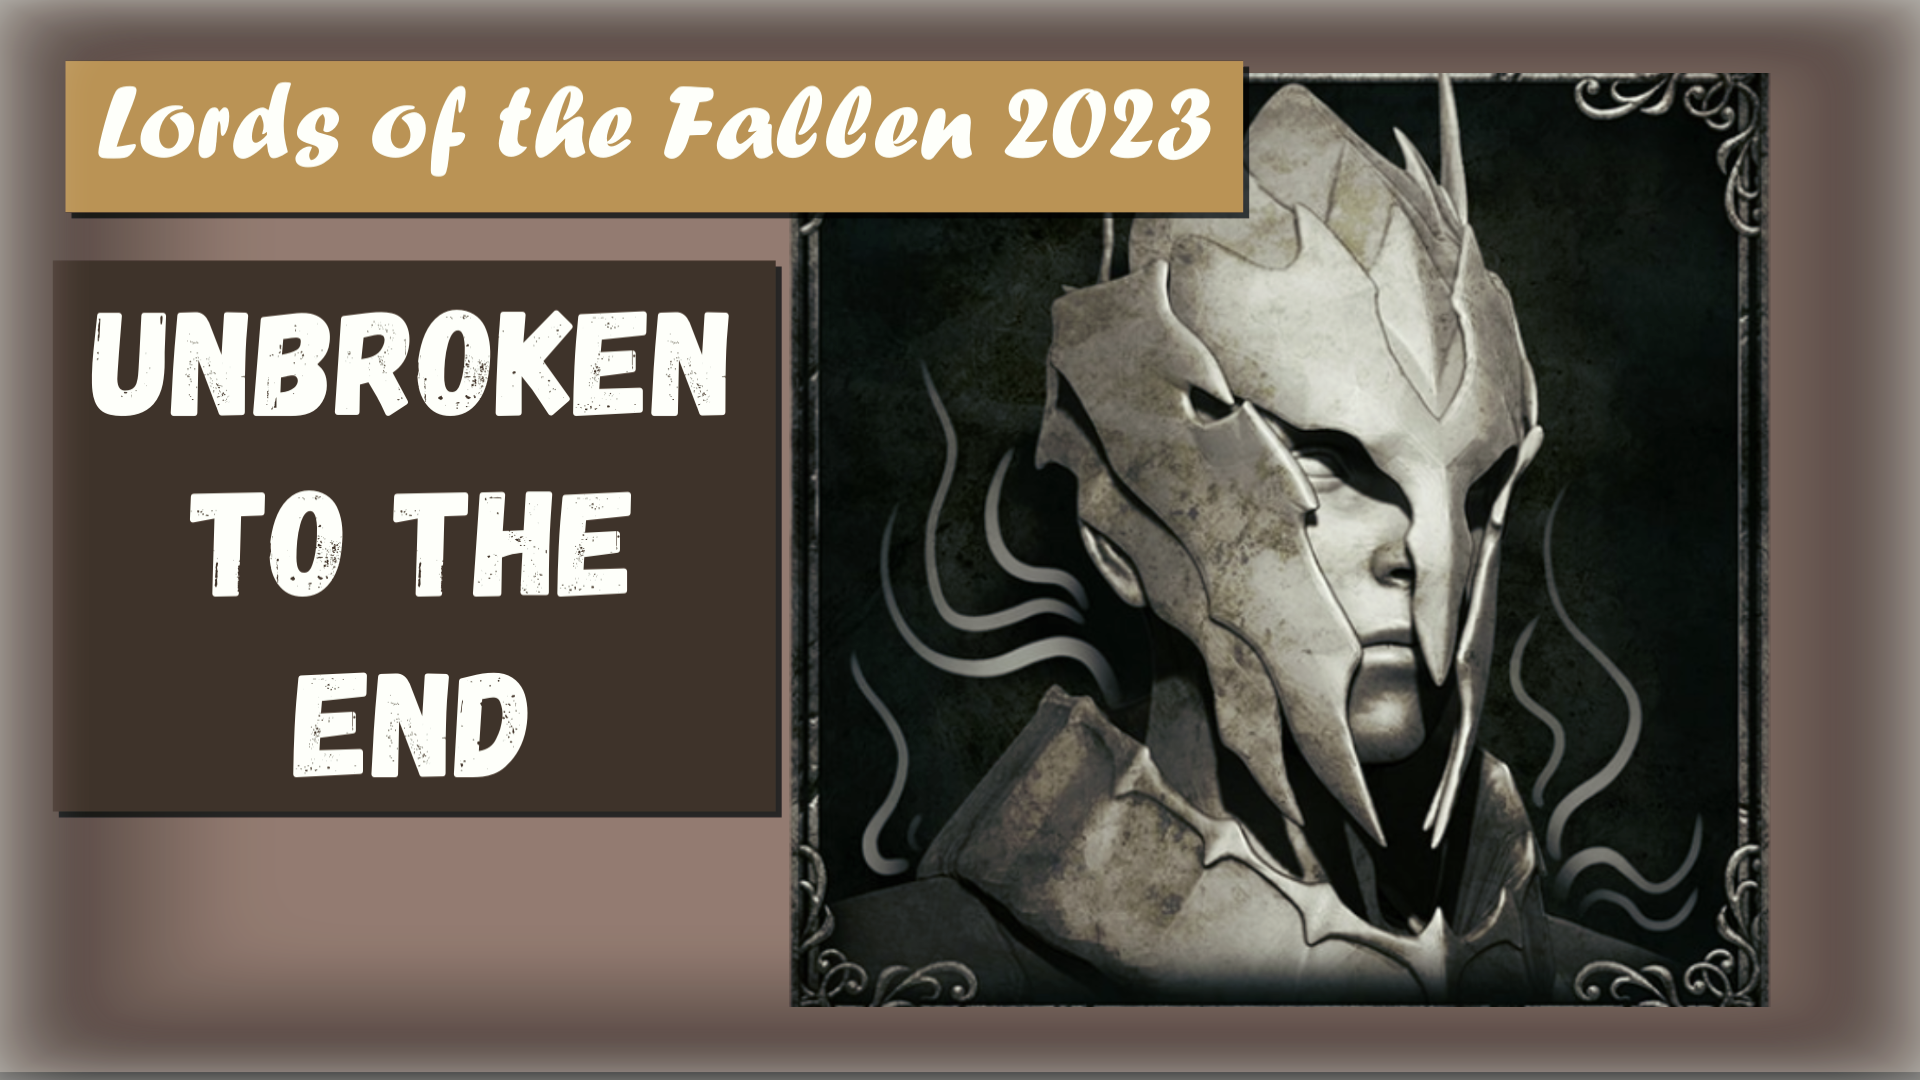 Lords of the Fallen2023. Трофей " Unbroken to the End" Босс:Мучительница Дервла,Присягнувший рыцарь